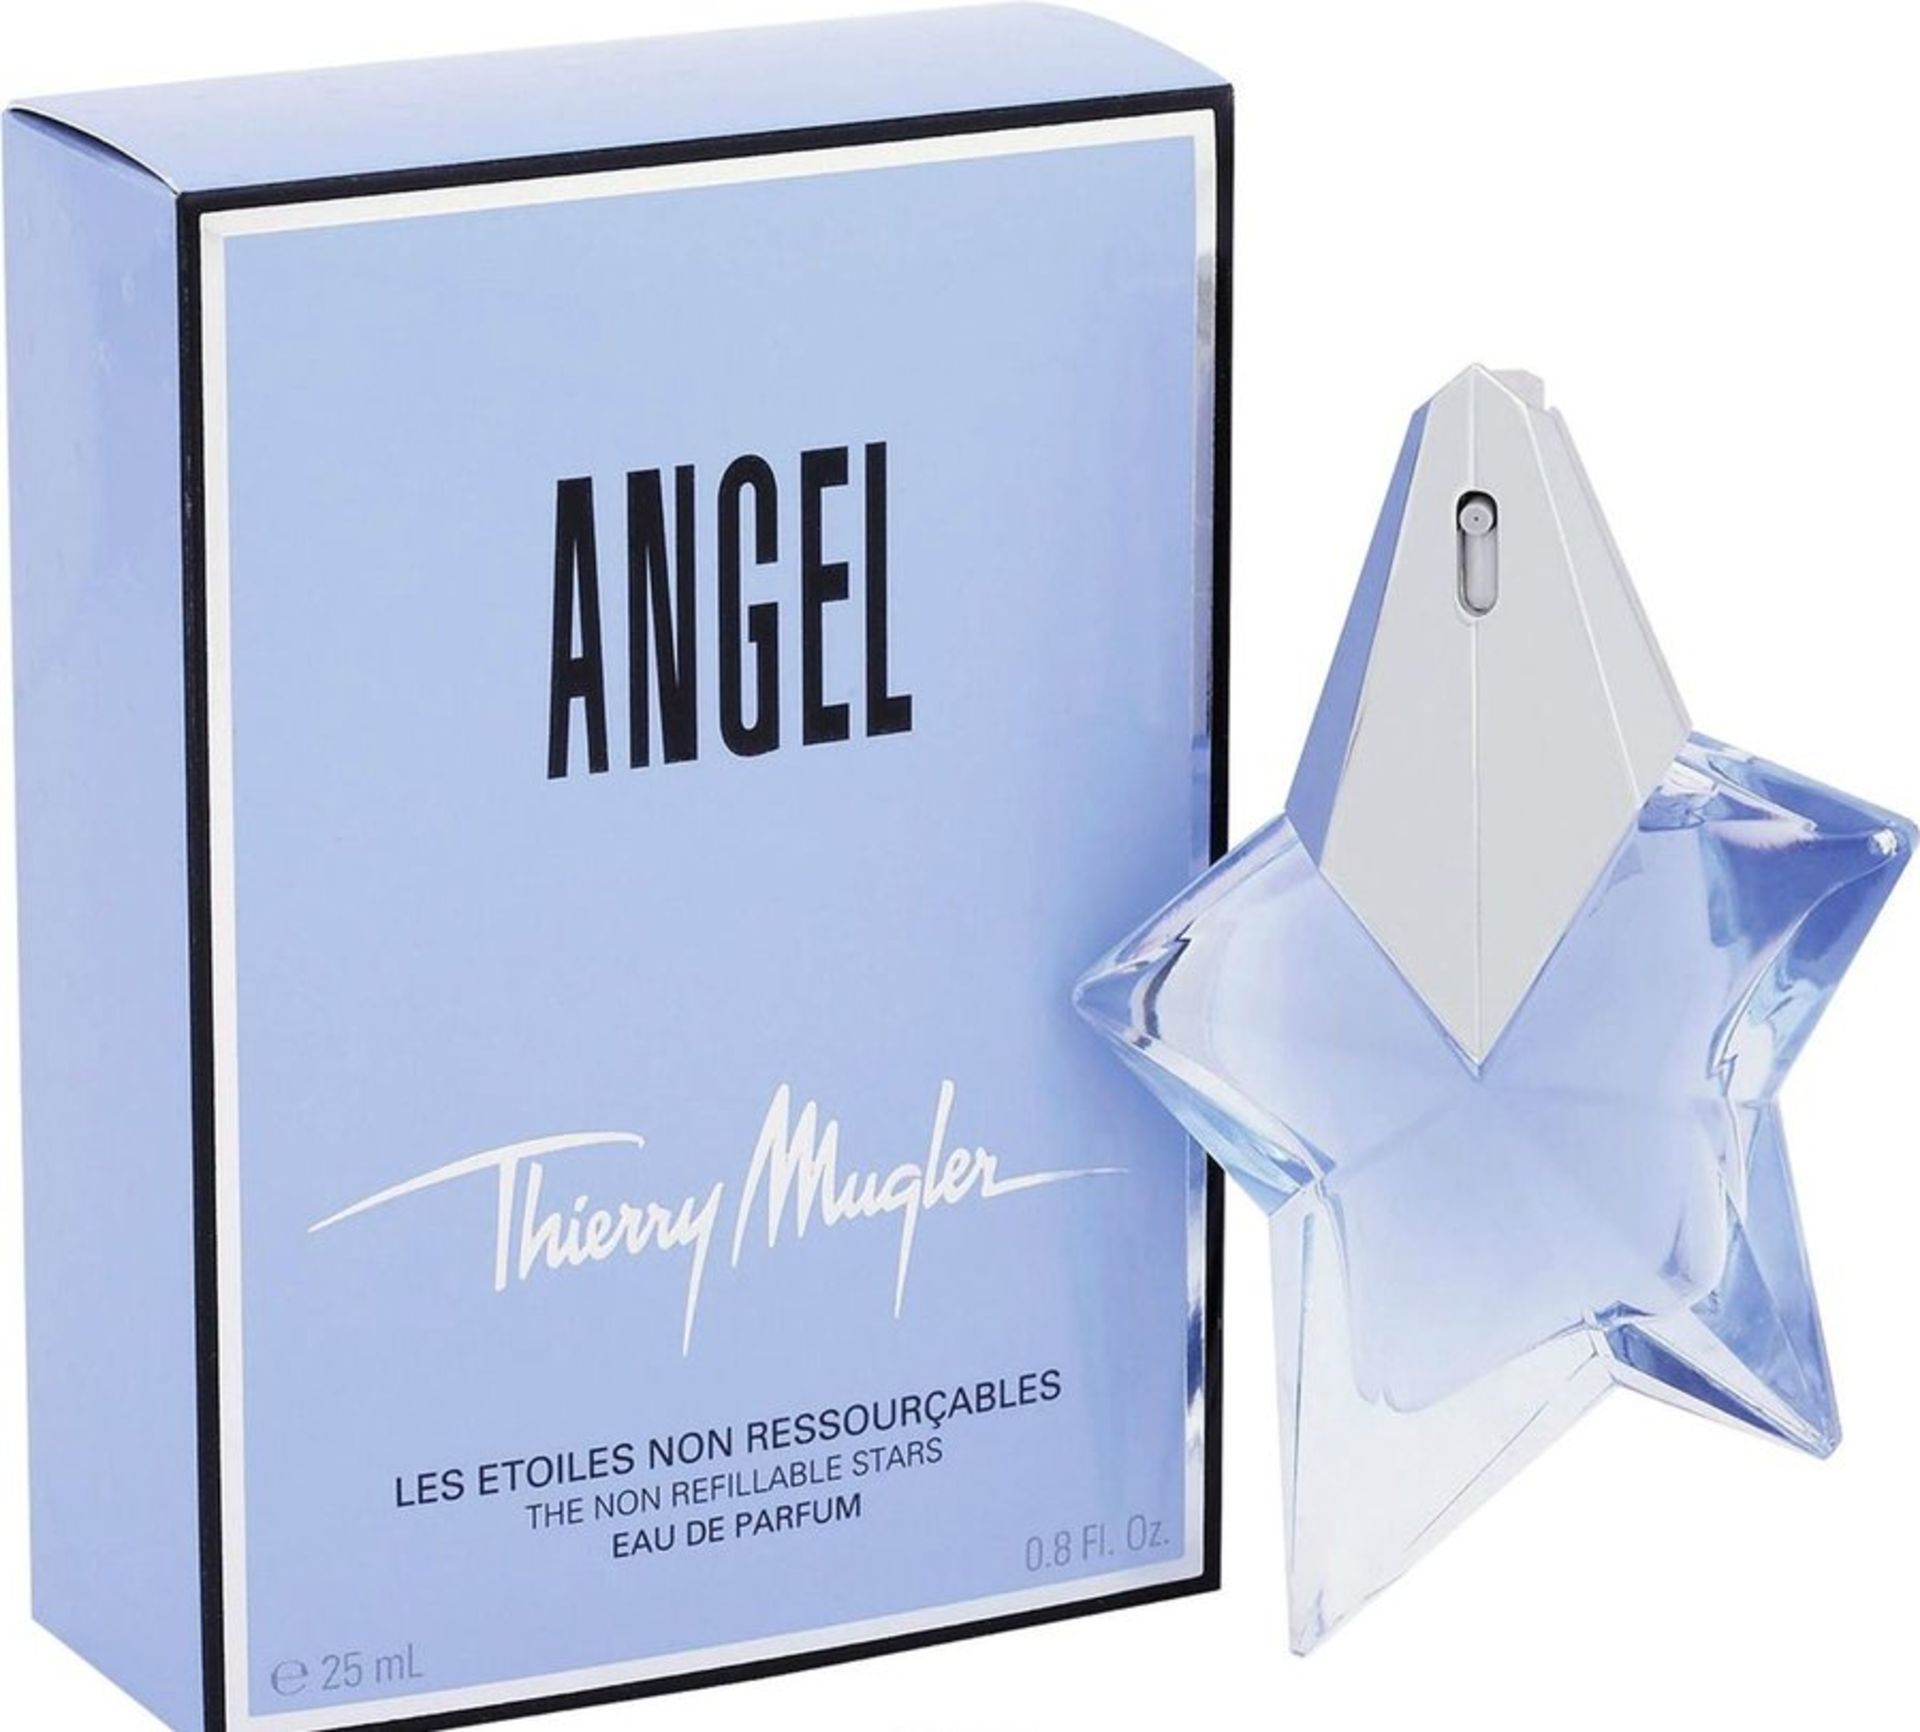 V Brand New Thierry Mugler Angel 25ml EDP Spray Refillable